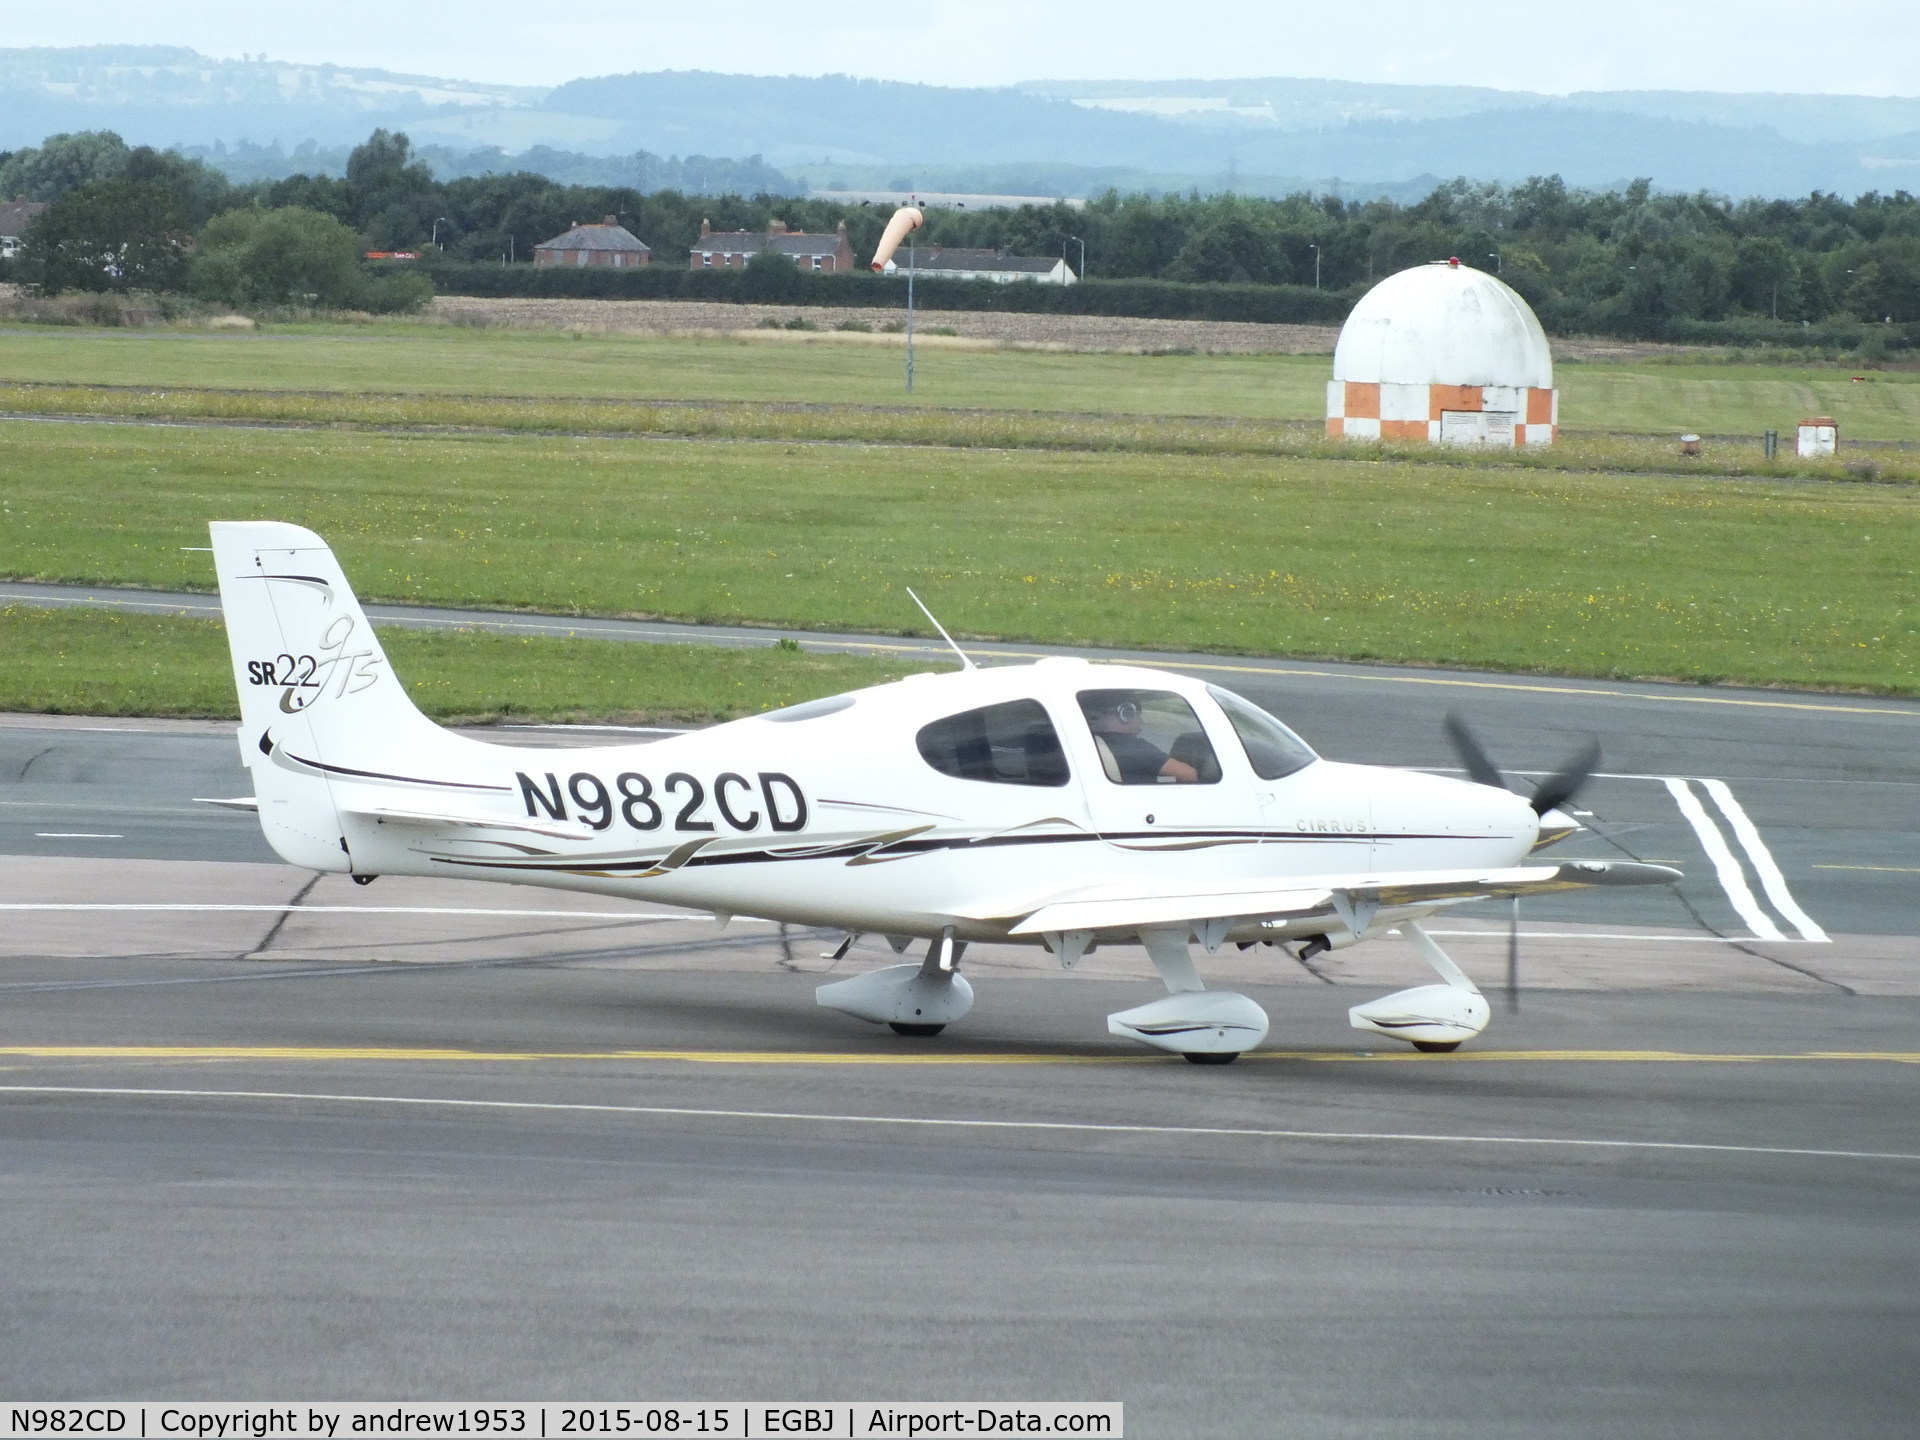 N982CD, 2006 Cirrus SR22 GTS C/N 1853, N982CD at Gloucestershire Airport.